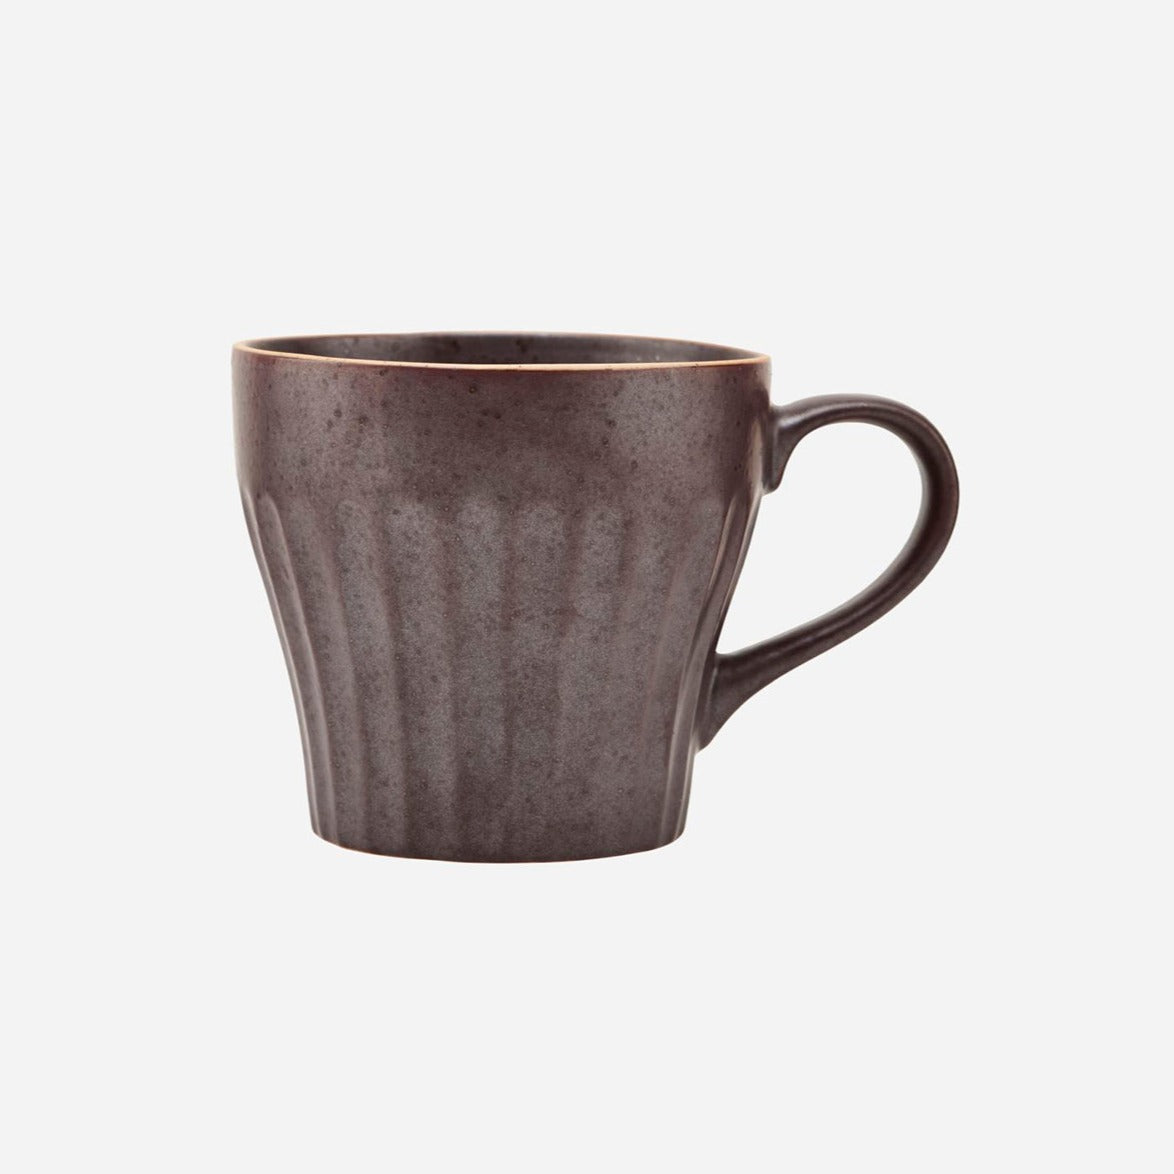 Berica Cup - Brown